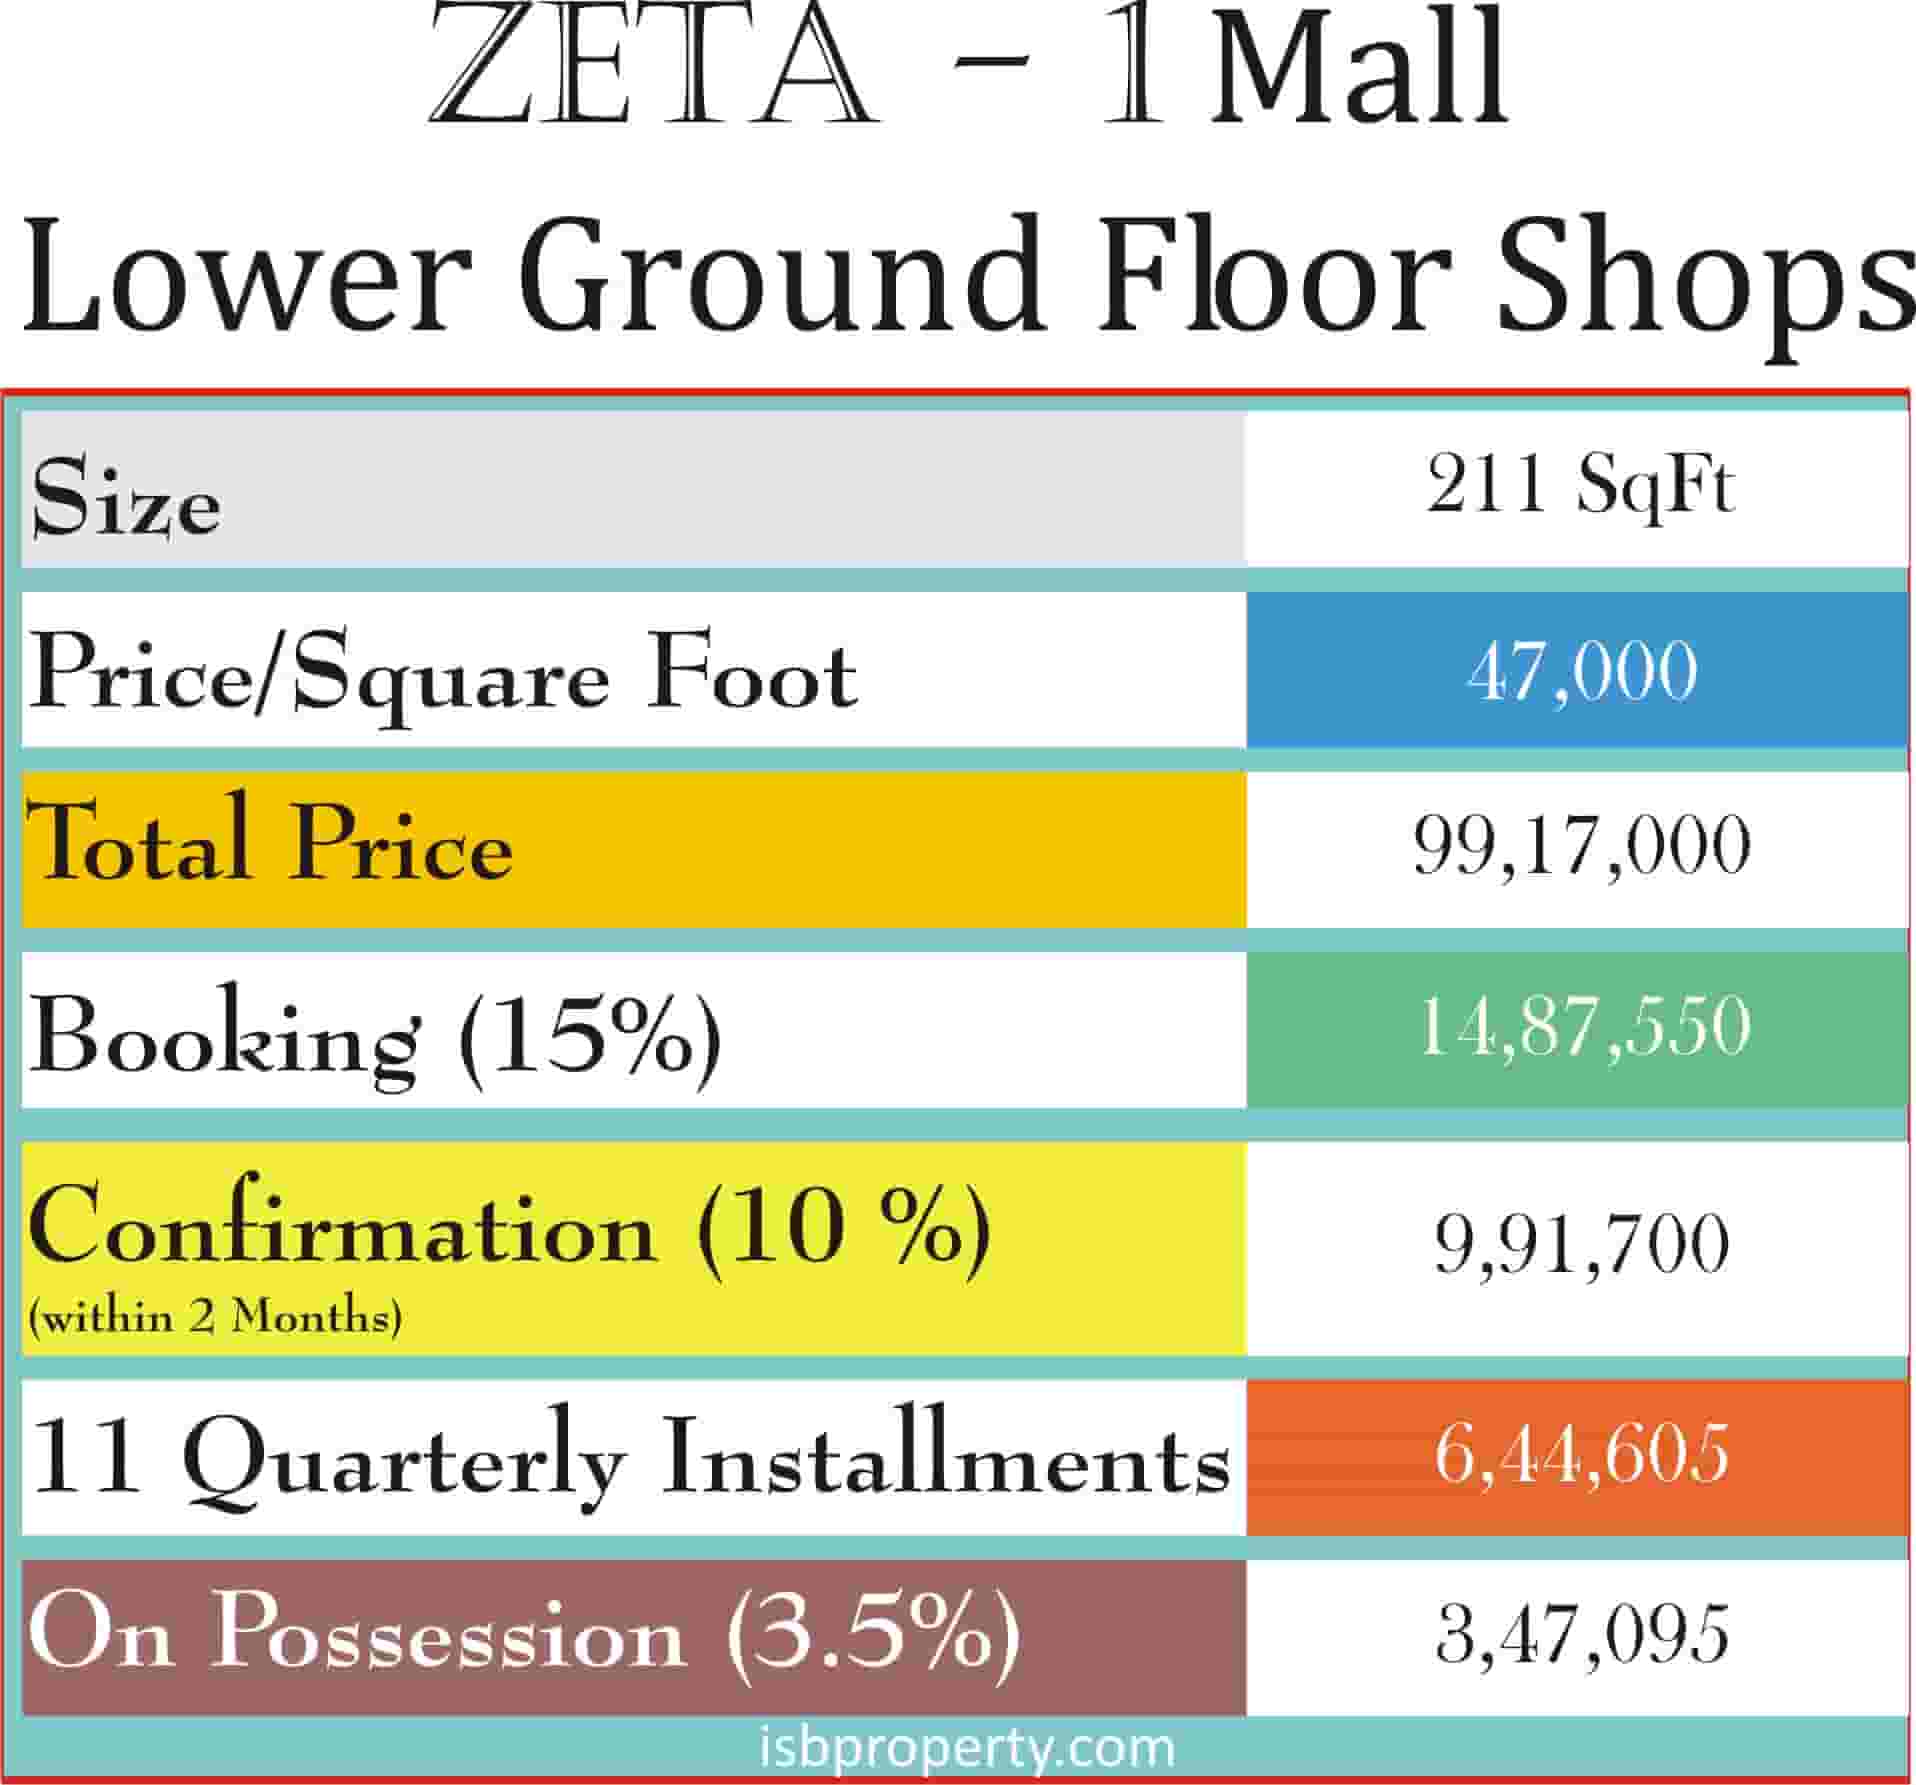 Zeta-1 Mall Lower Ground Payment Plan